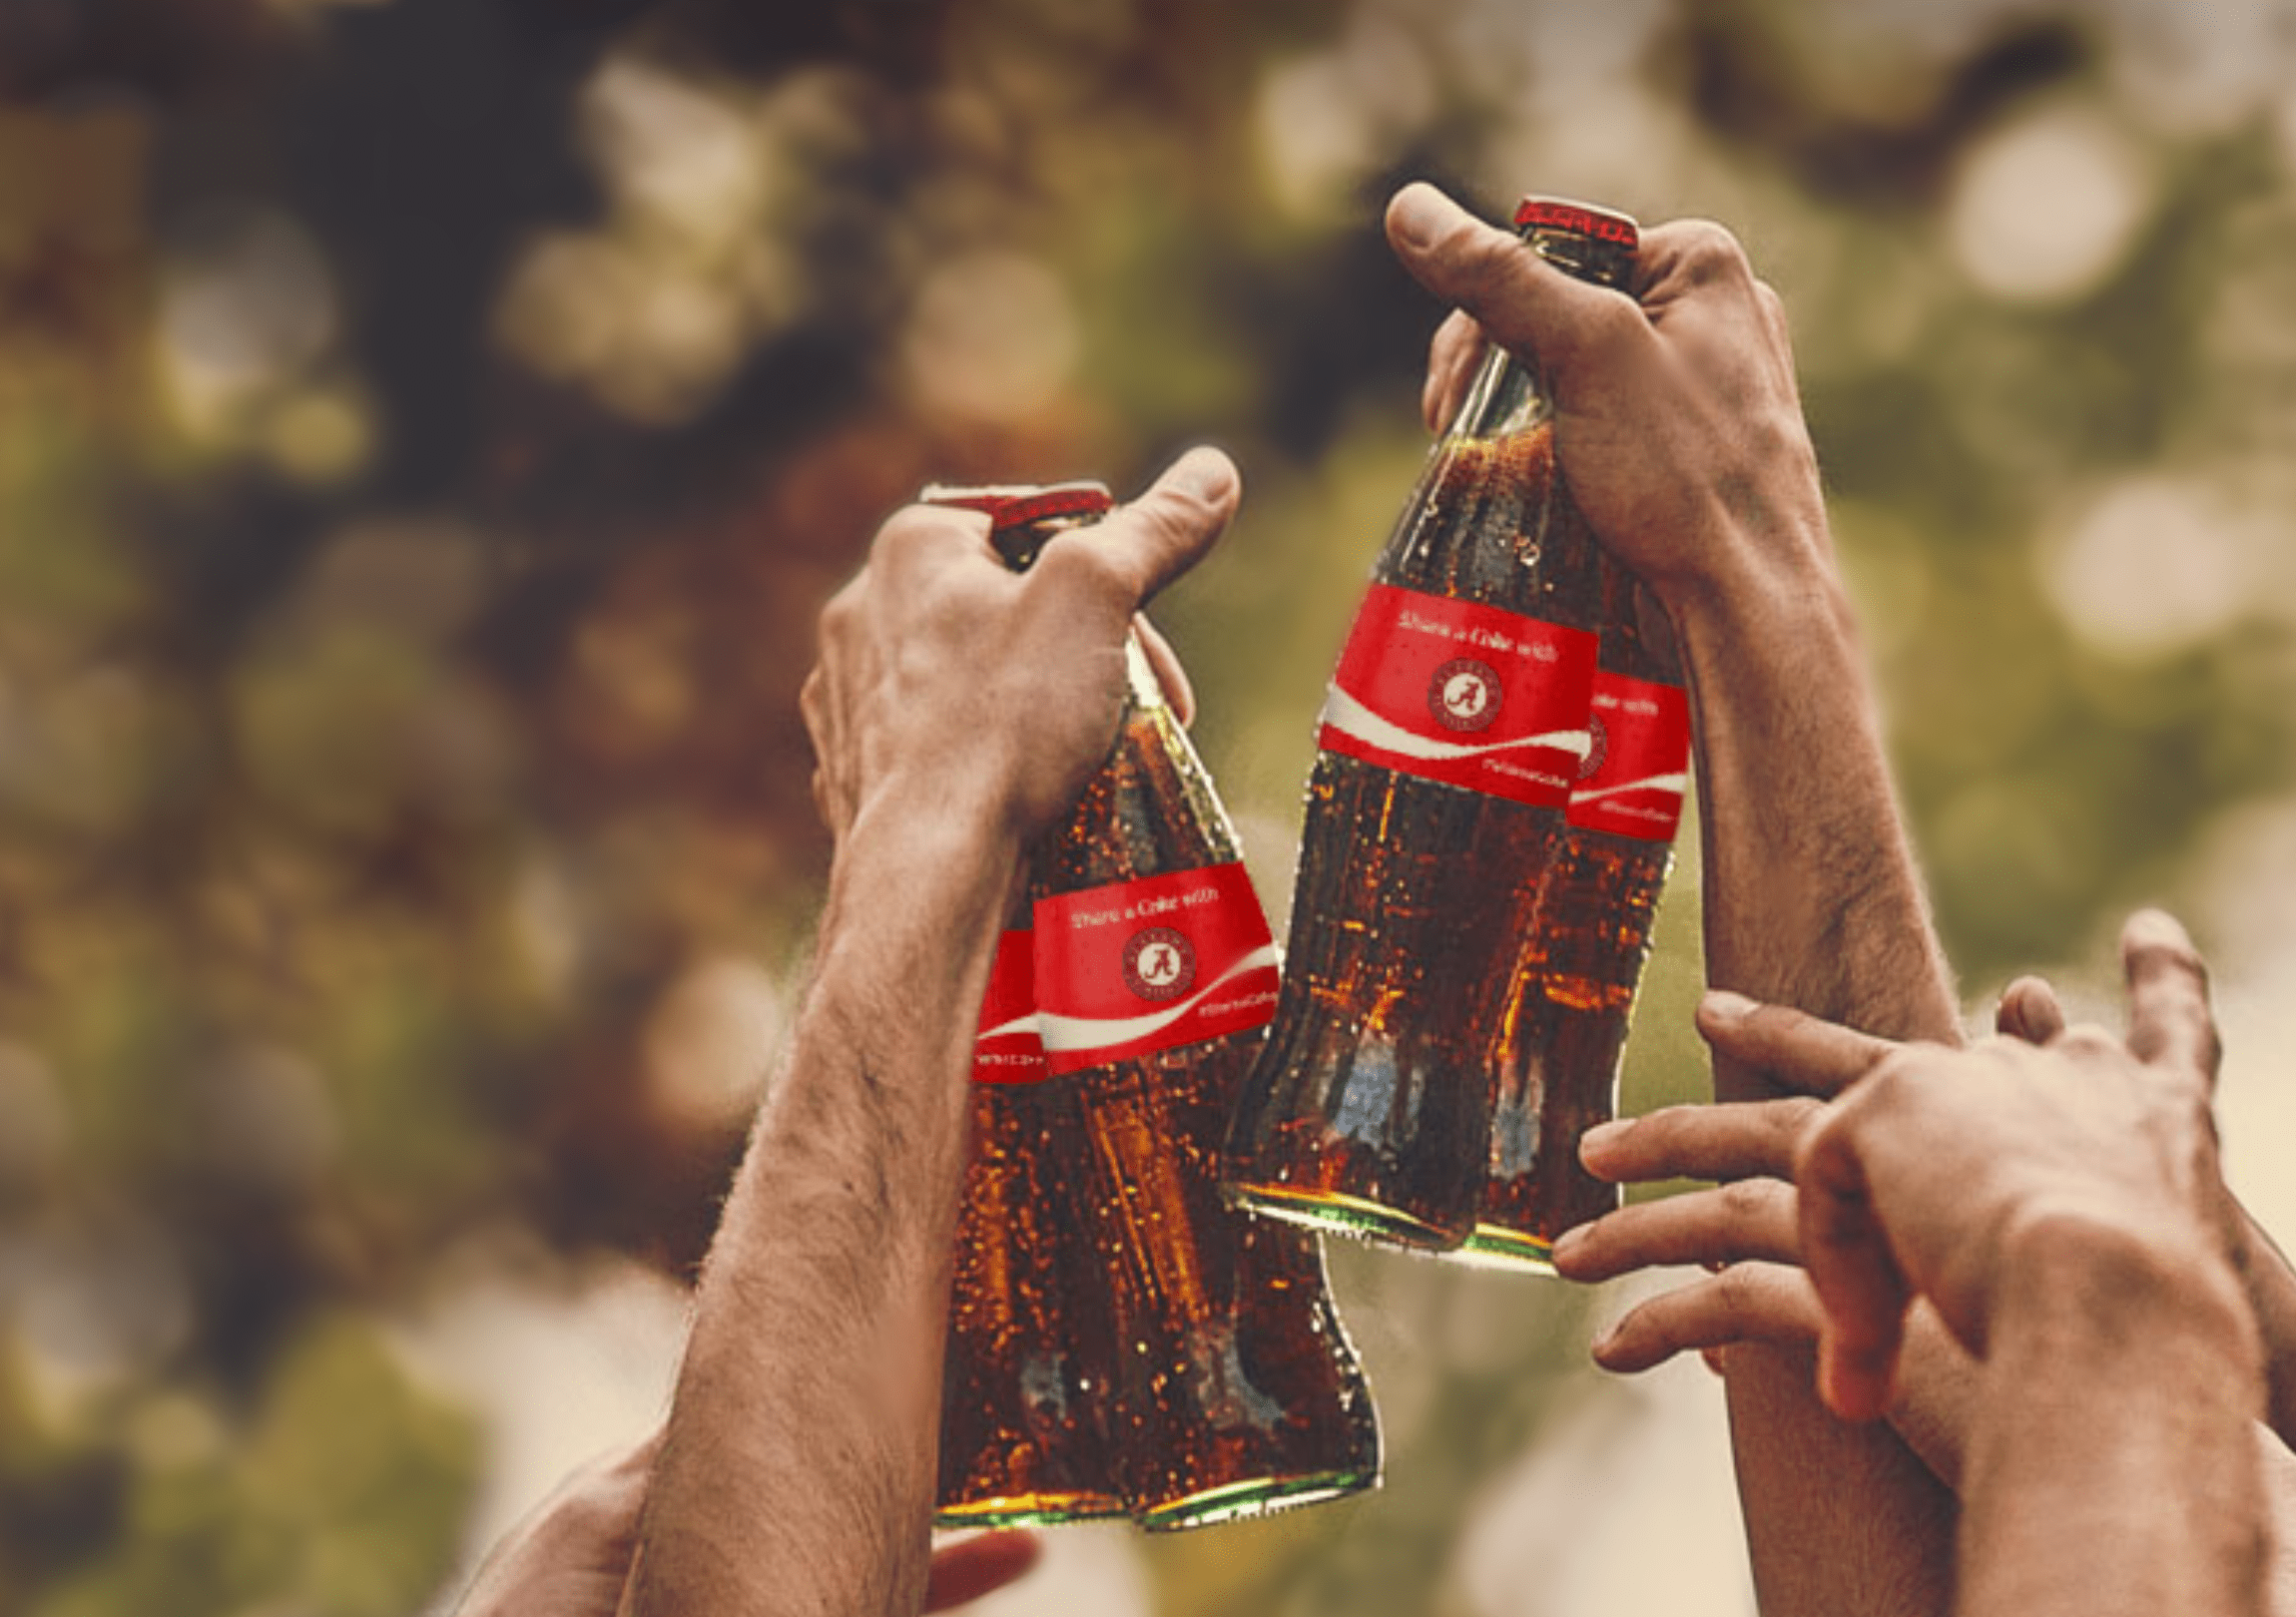 group of hands shown cheering coke bottles with Atlanta Braves logo shown